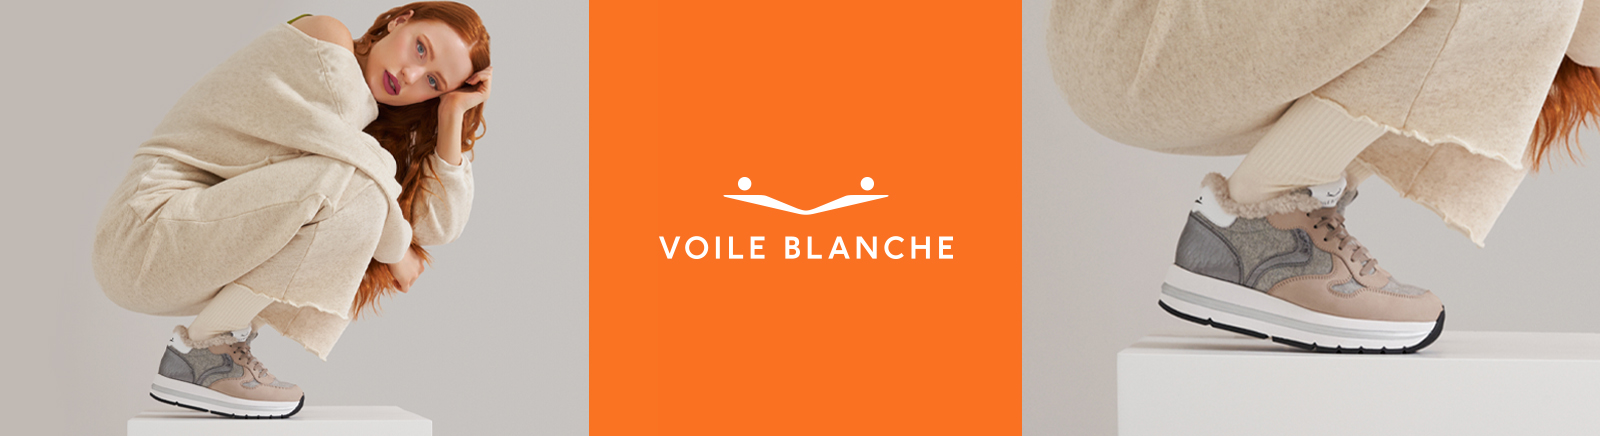 Juppen: Voile Blanche Halbschuhe für Herren online shoppen